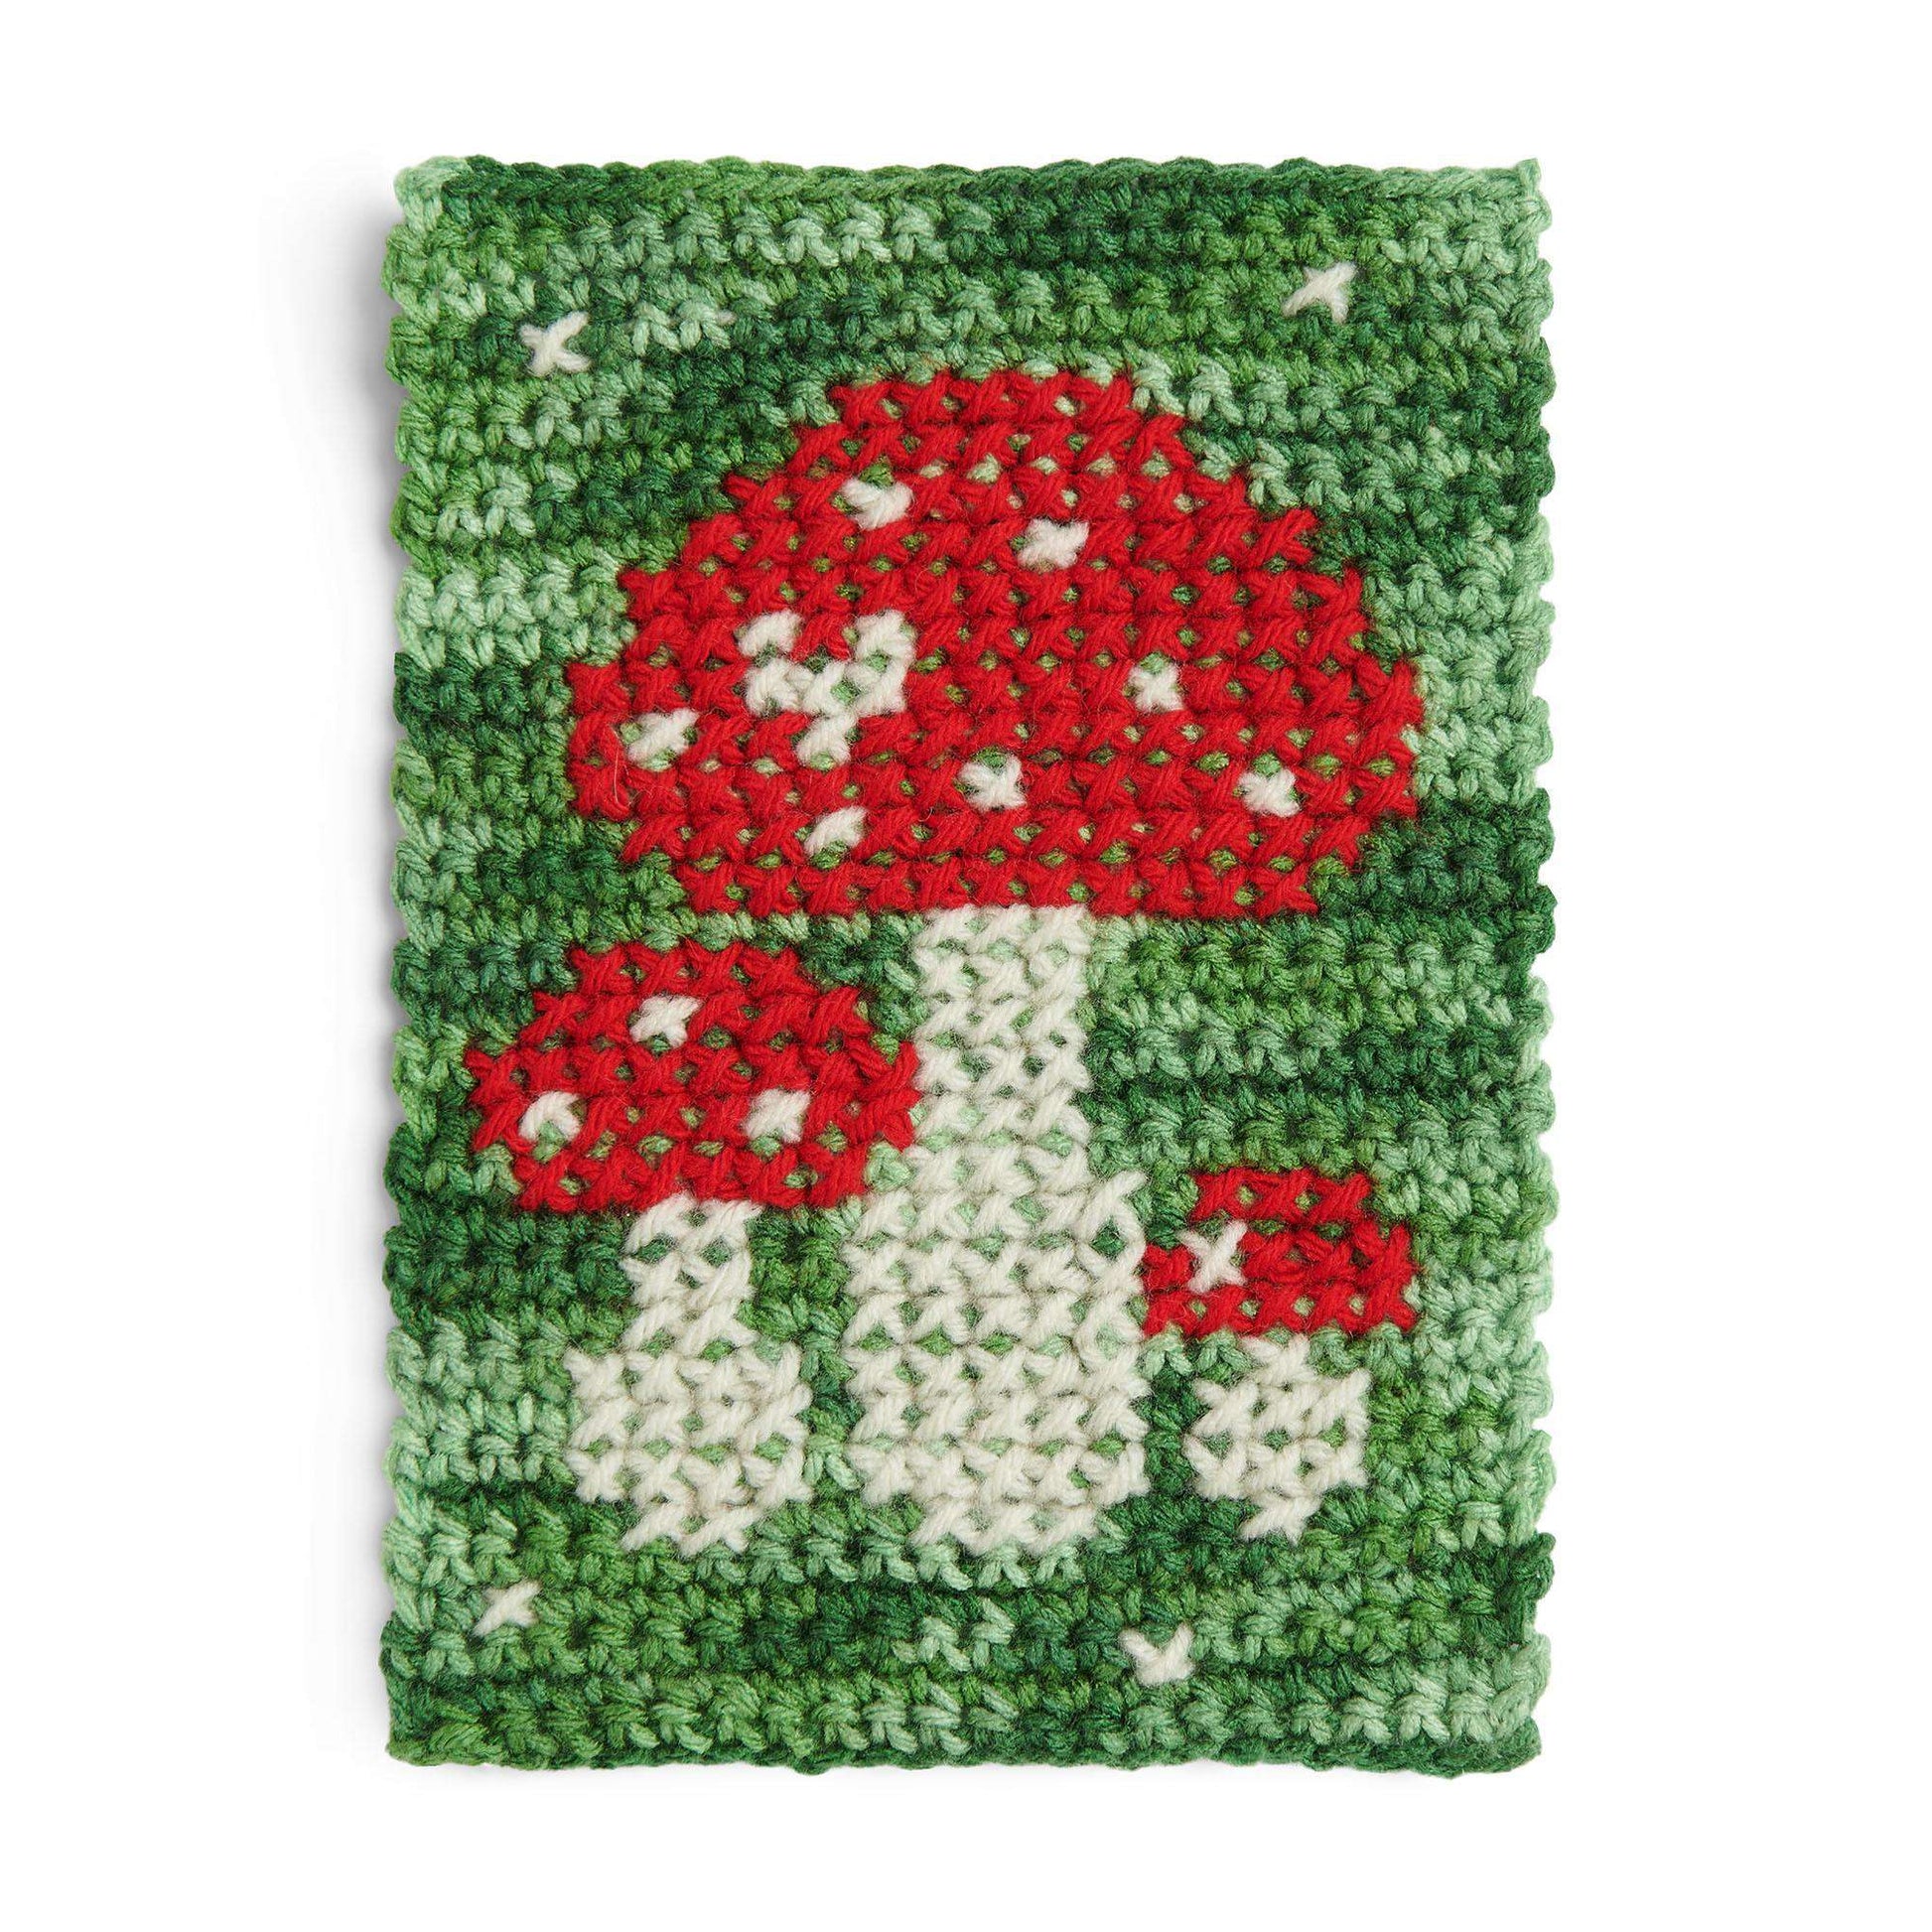 Free Red Heart Crochet Mushroom Cross Stitch Block Pattern